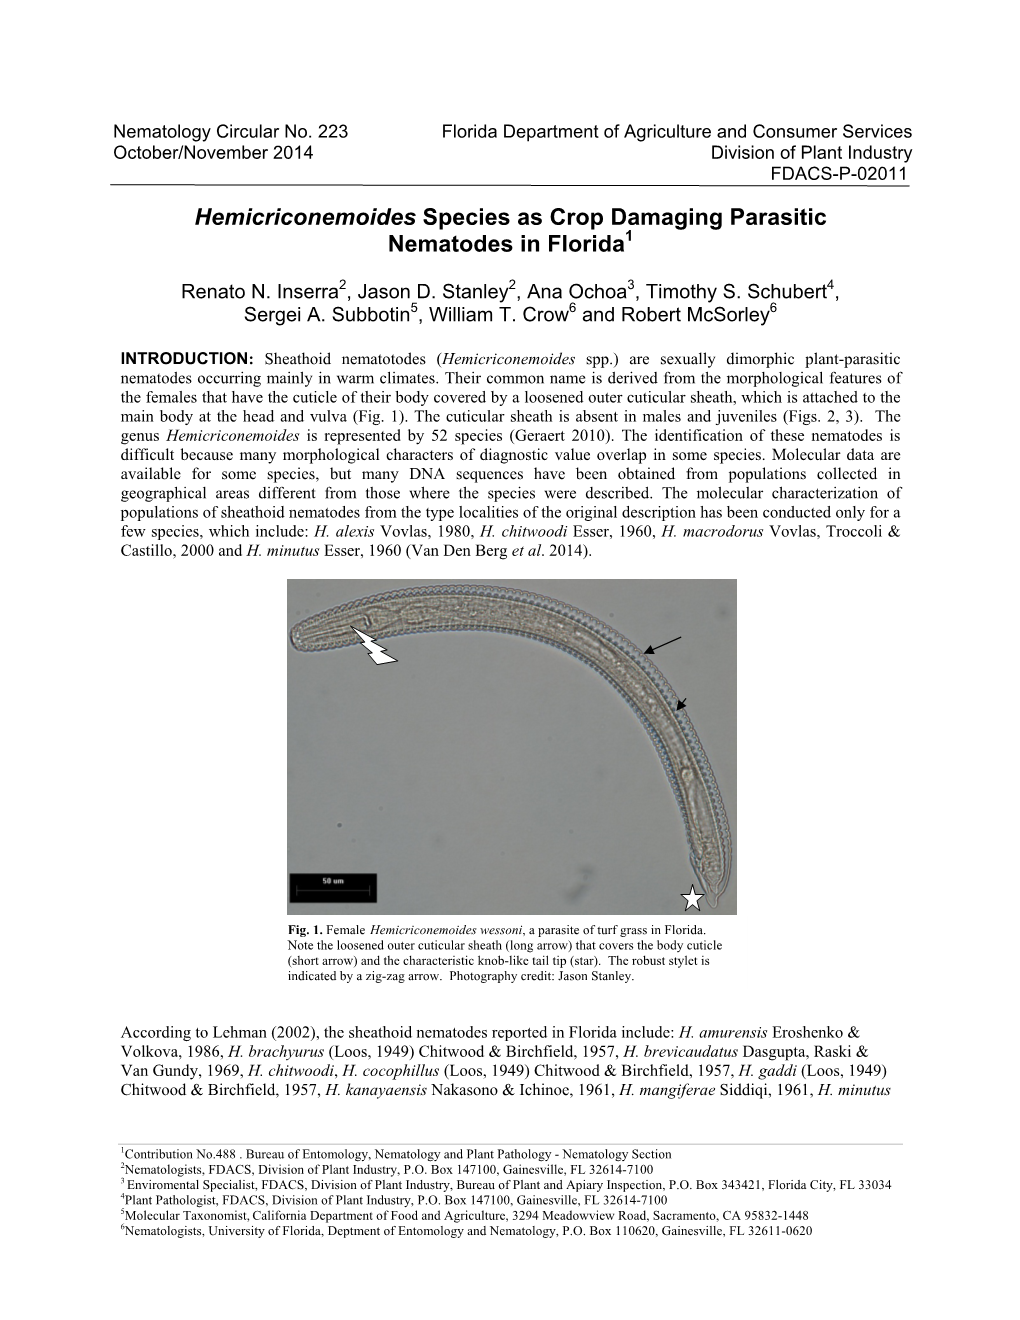 Hemicriconemoides Species As Crop Damaging Parasitic Nematodes in Florida1